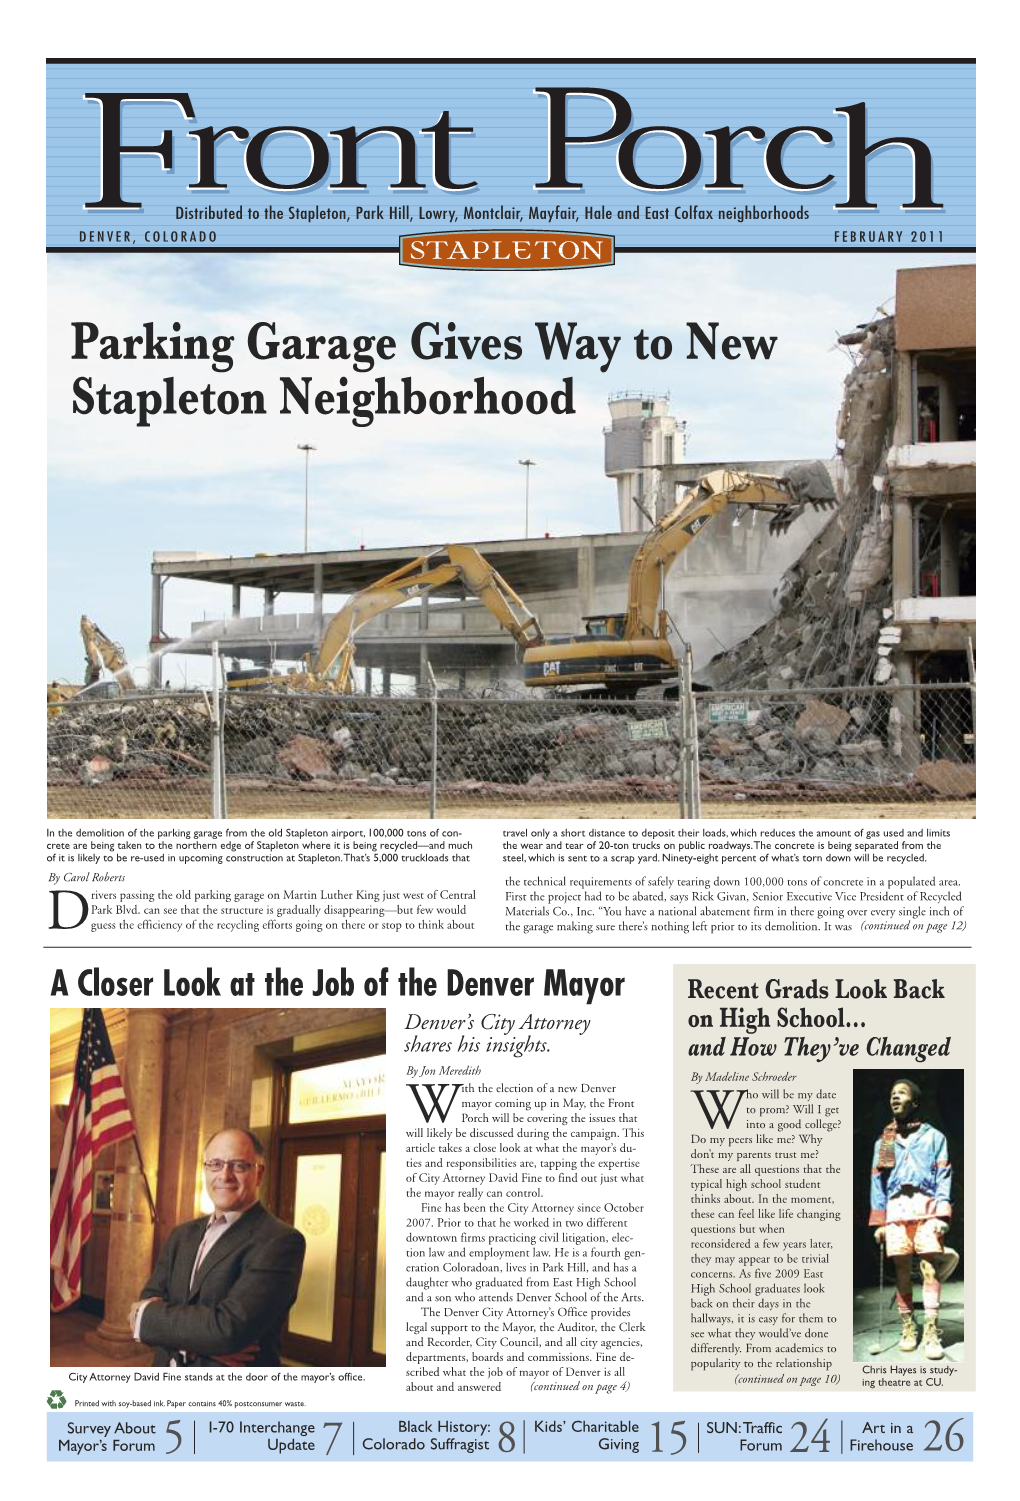 Parking Garage Gives Way to New Stapleton Neighborhood